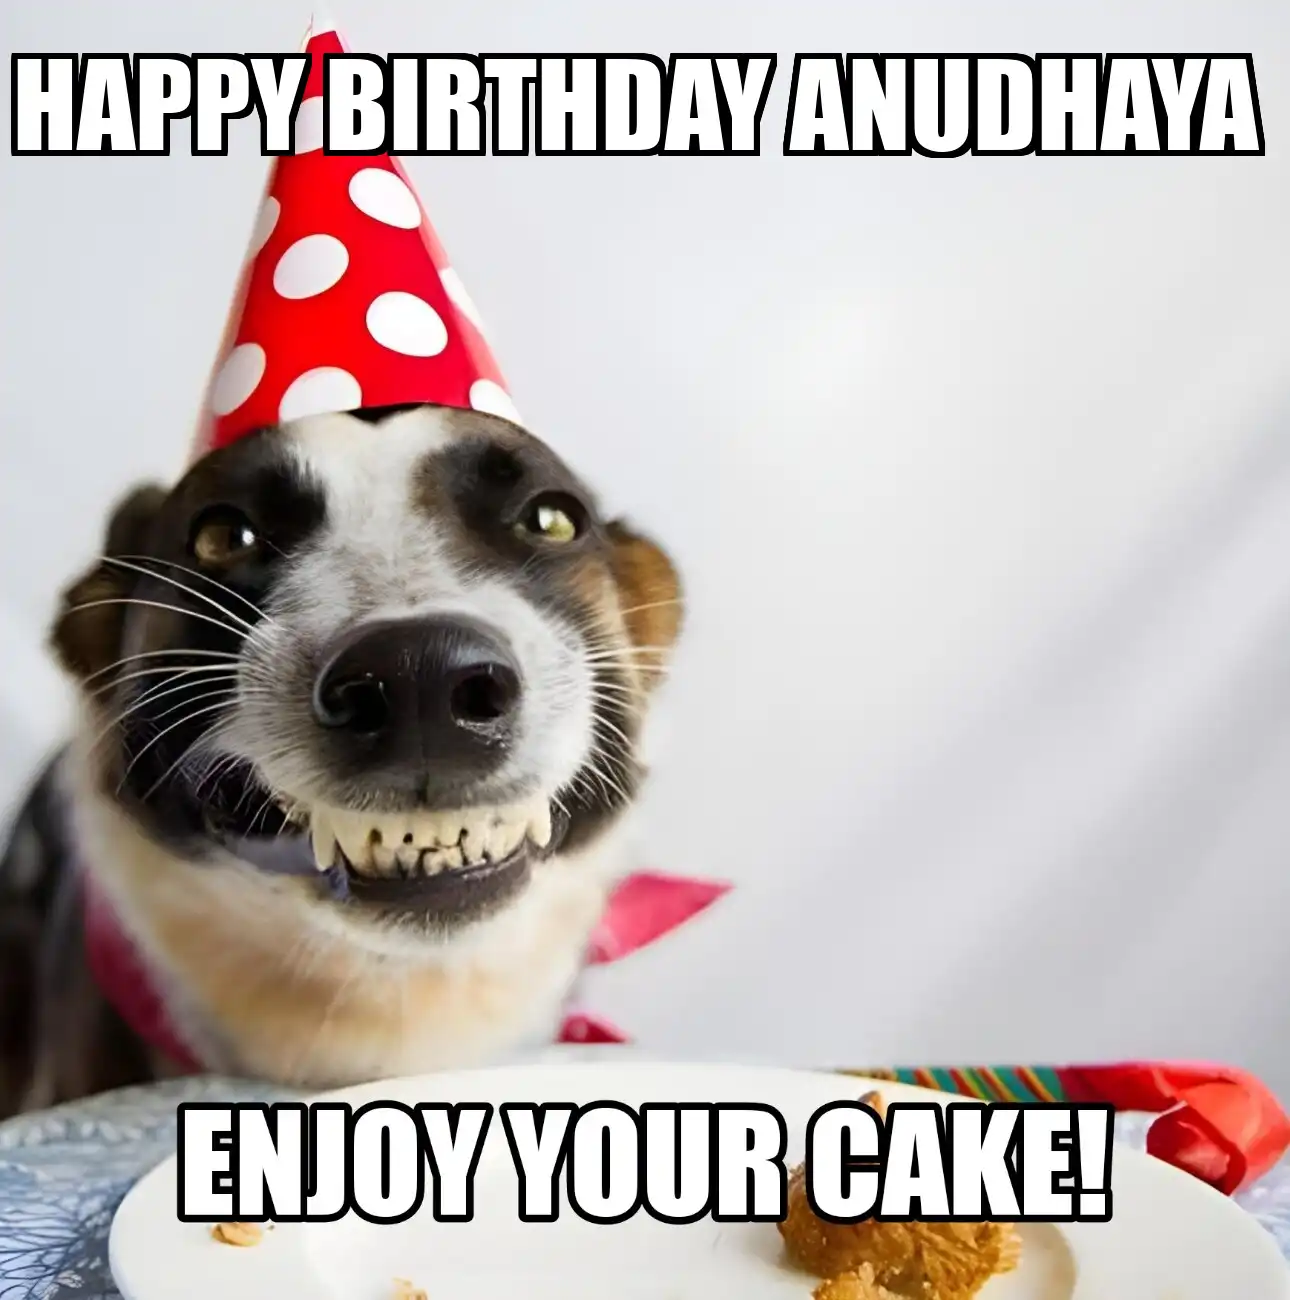 Happy Birthday Anudhaya Enjoy Your Cake Dog Meme